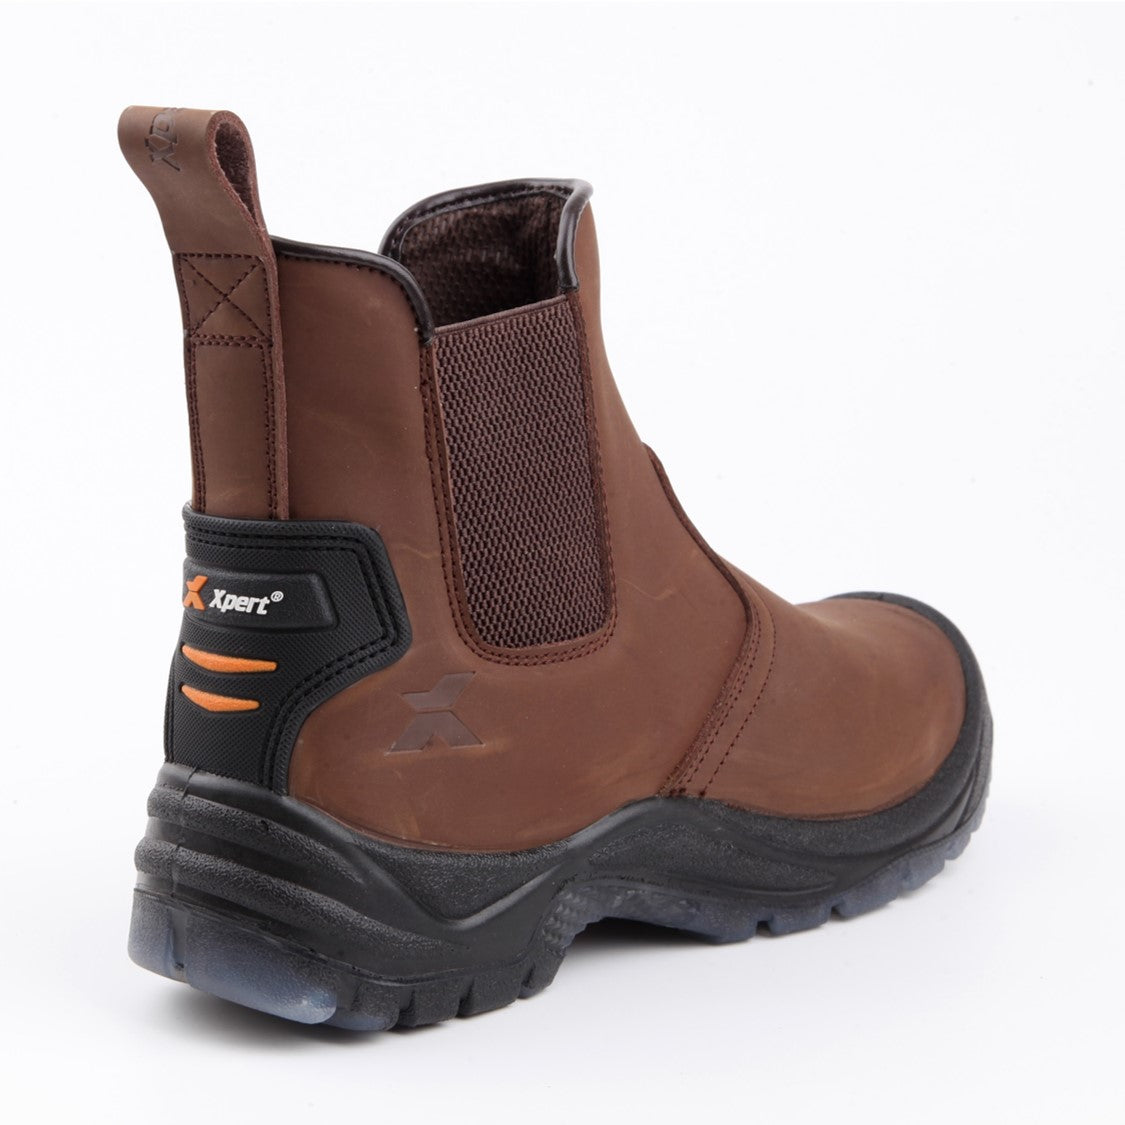 Xpert Defiant Safety Dealer Boots 